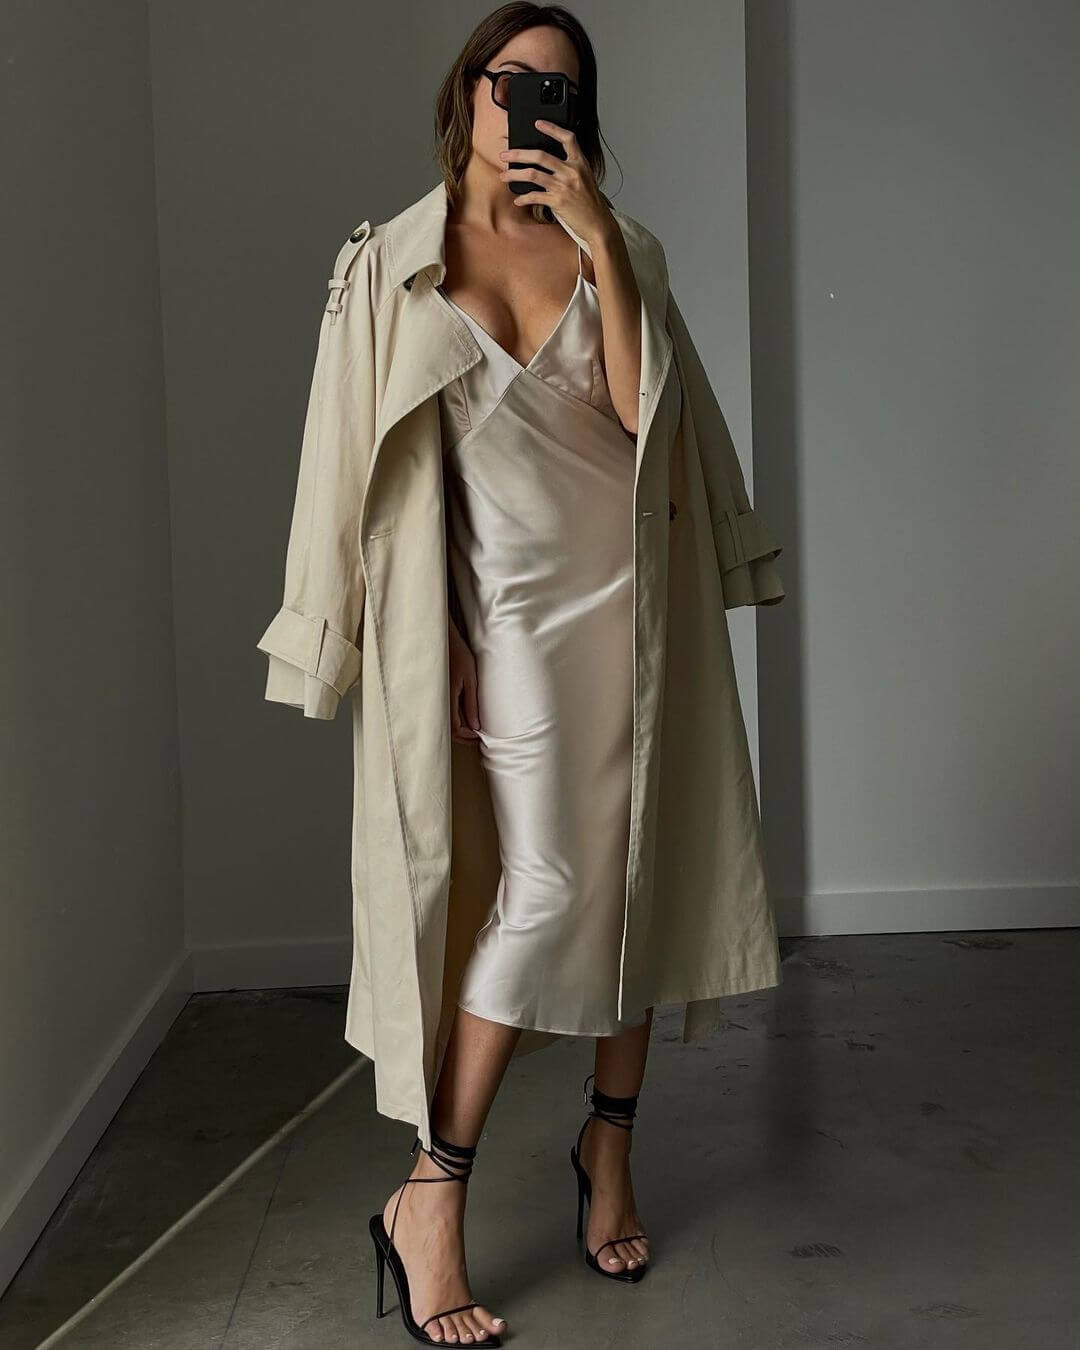 We're Loving This Effortlessly Layered Slip Dress Look